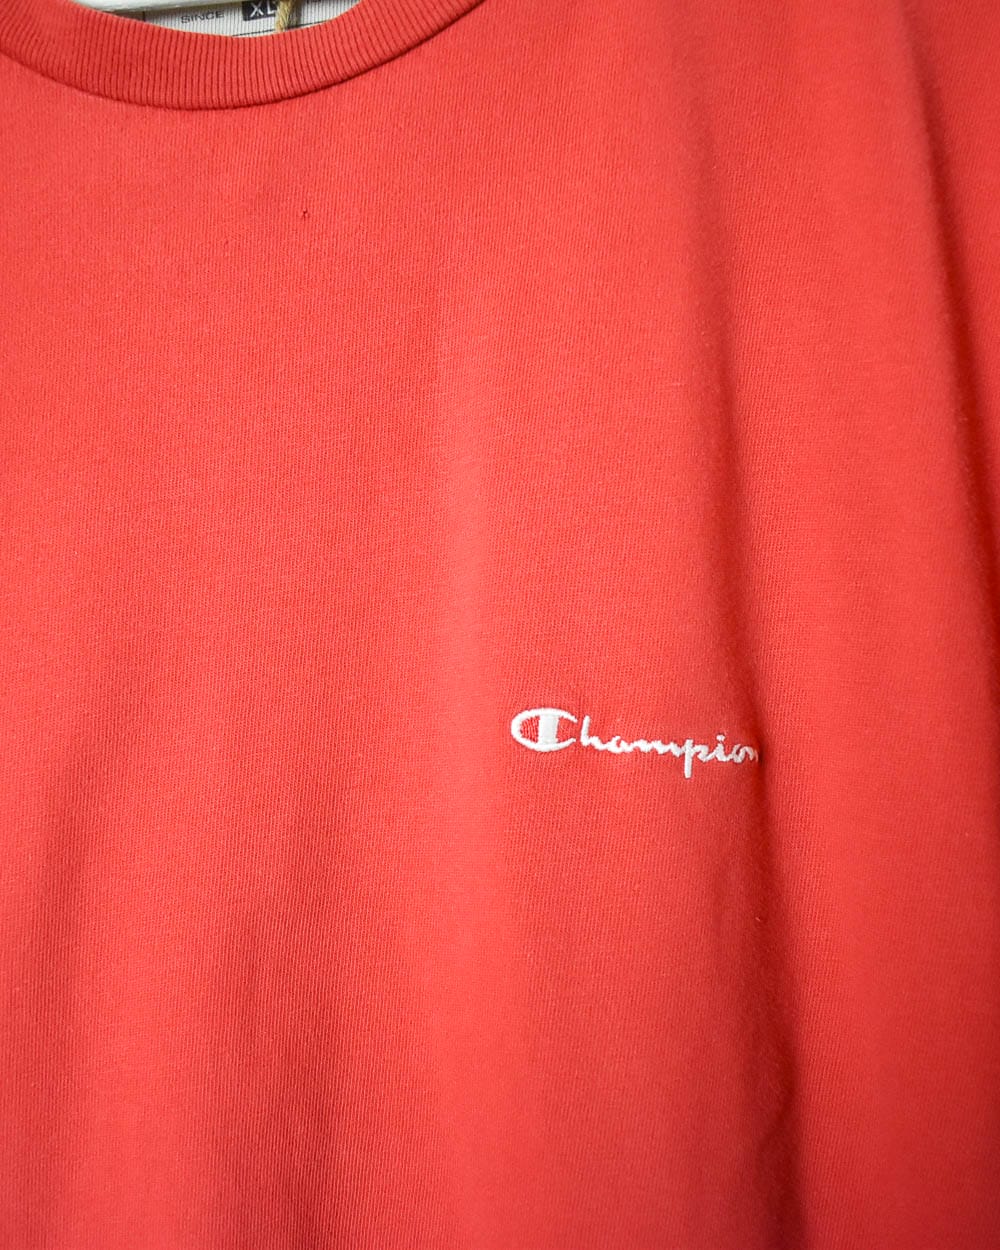 Red Champion T-Shirt - Large